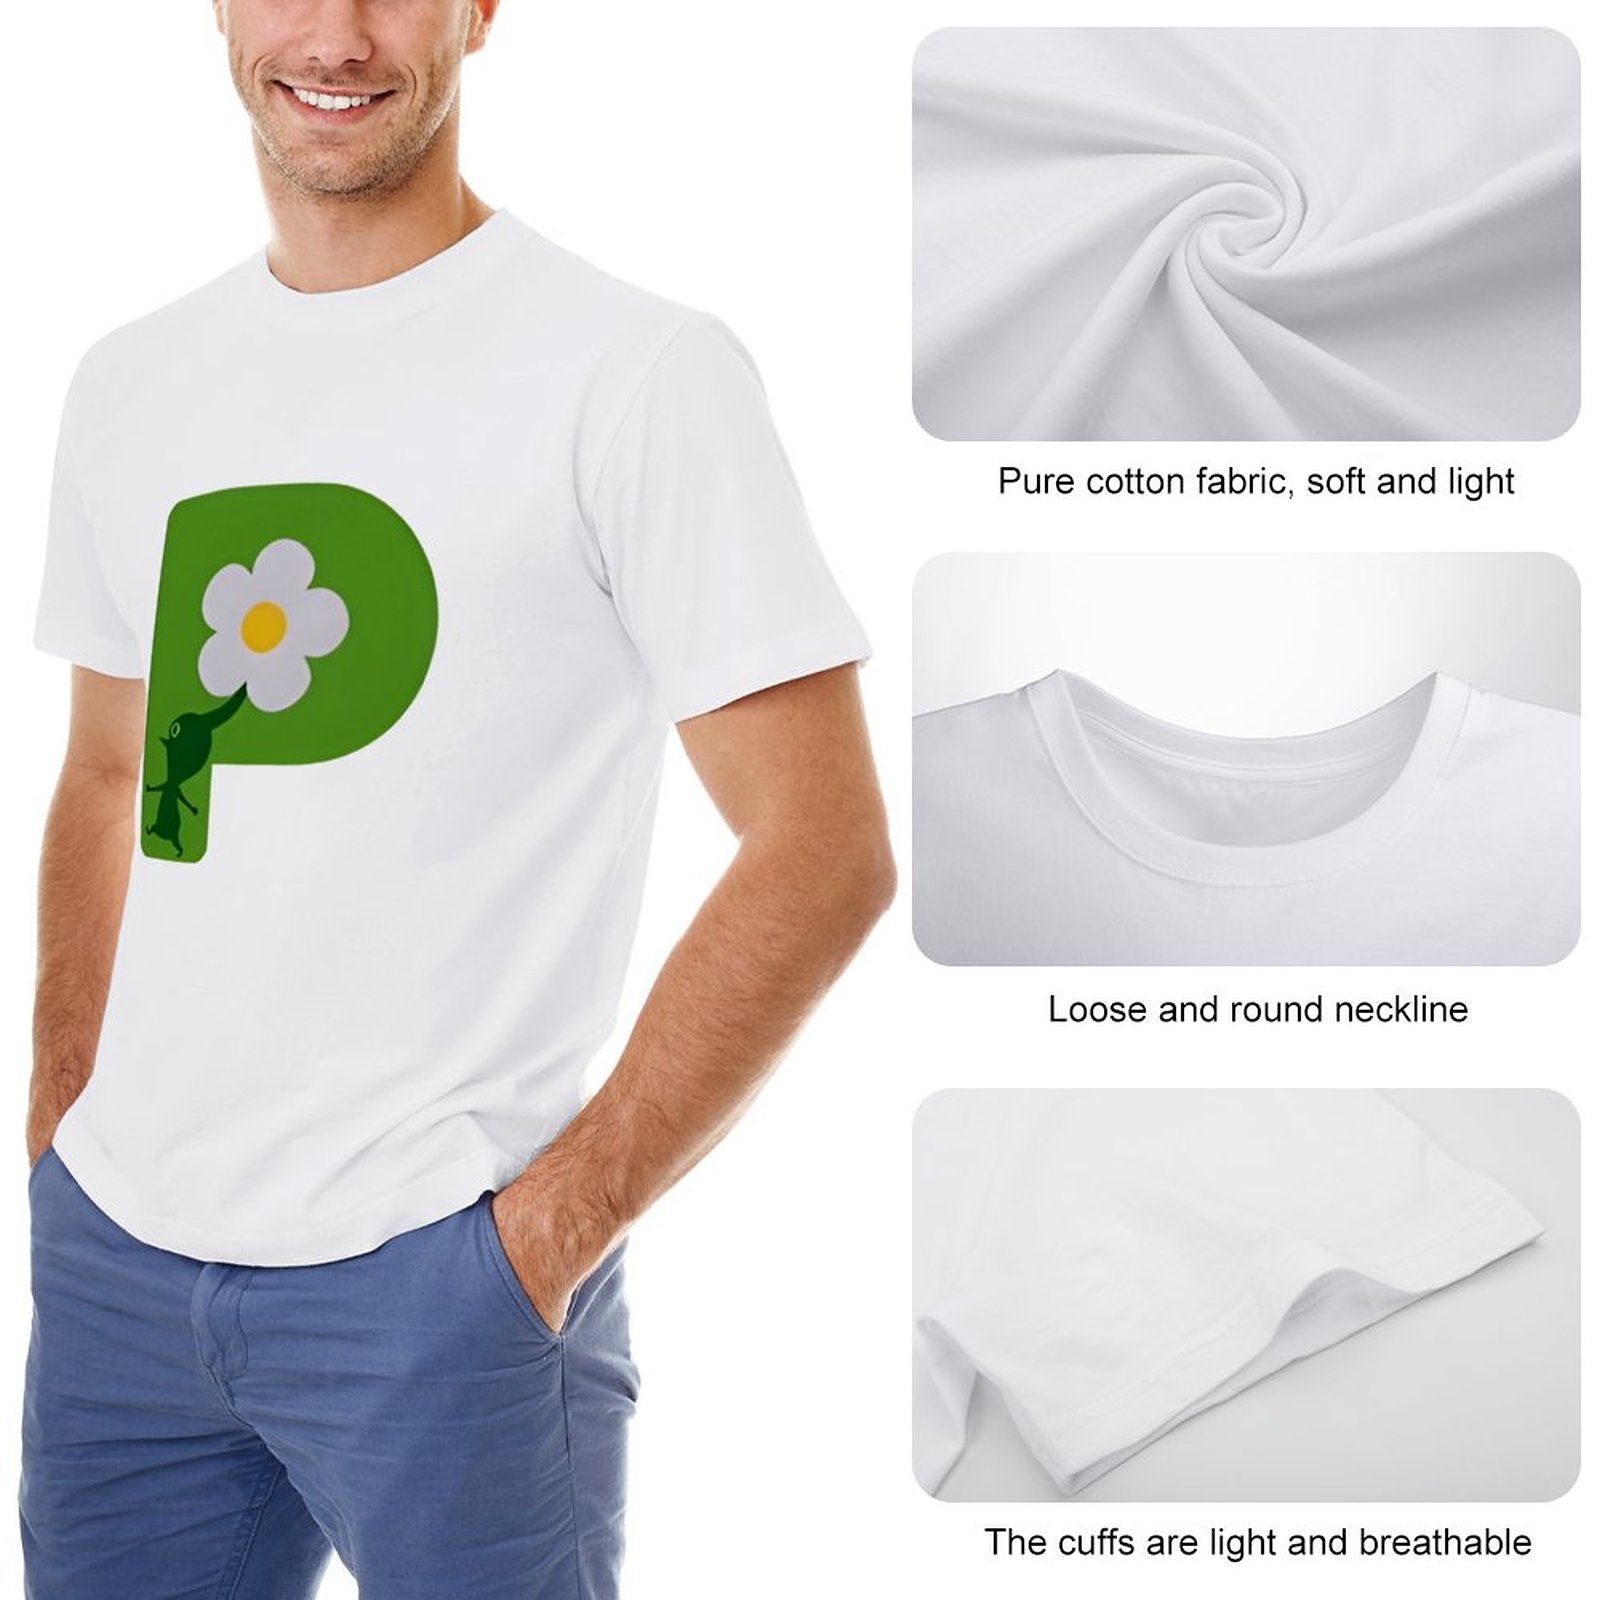 Pikmin Logo T Shirt Aesthetic clothing shirts graphic tees Men s clothing 1 - Pikmin Plush